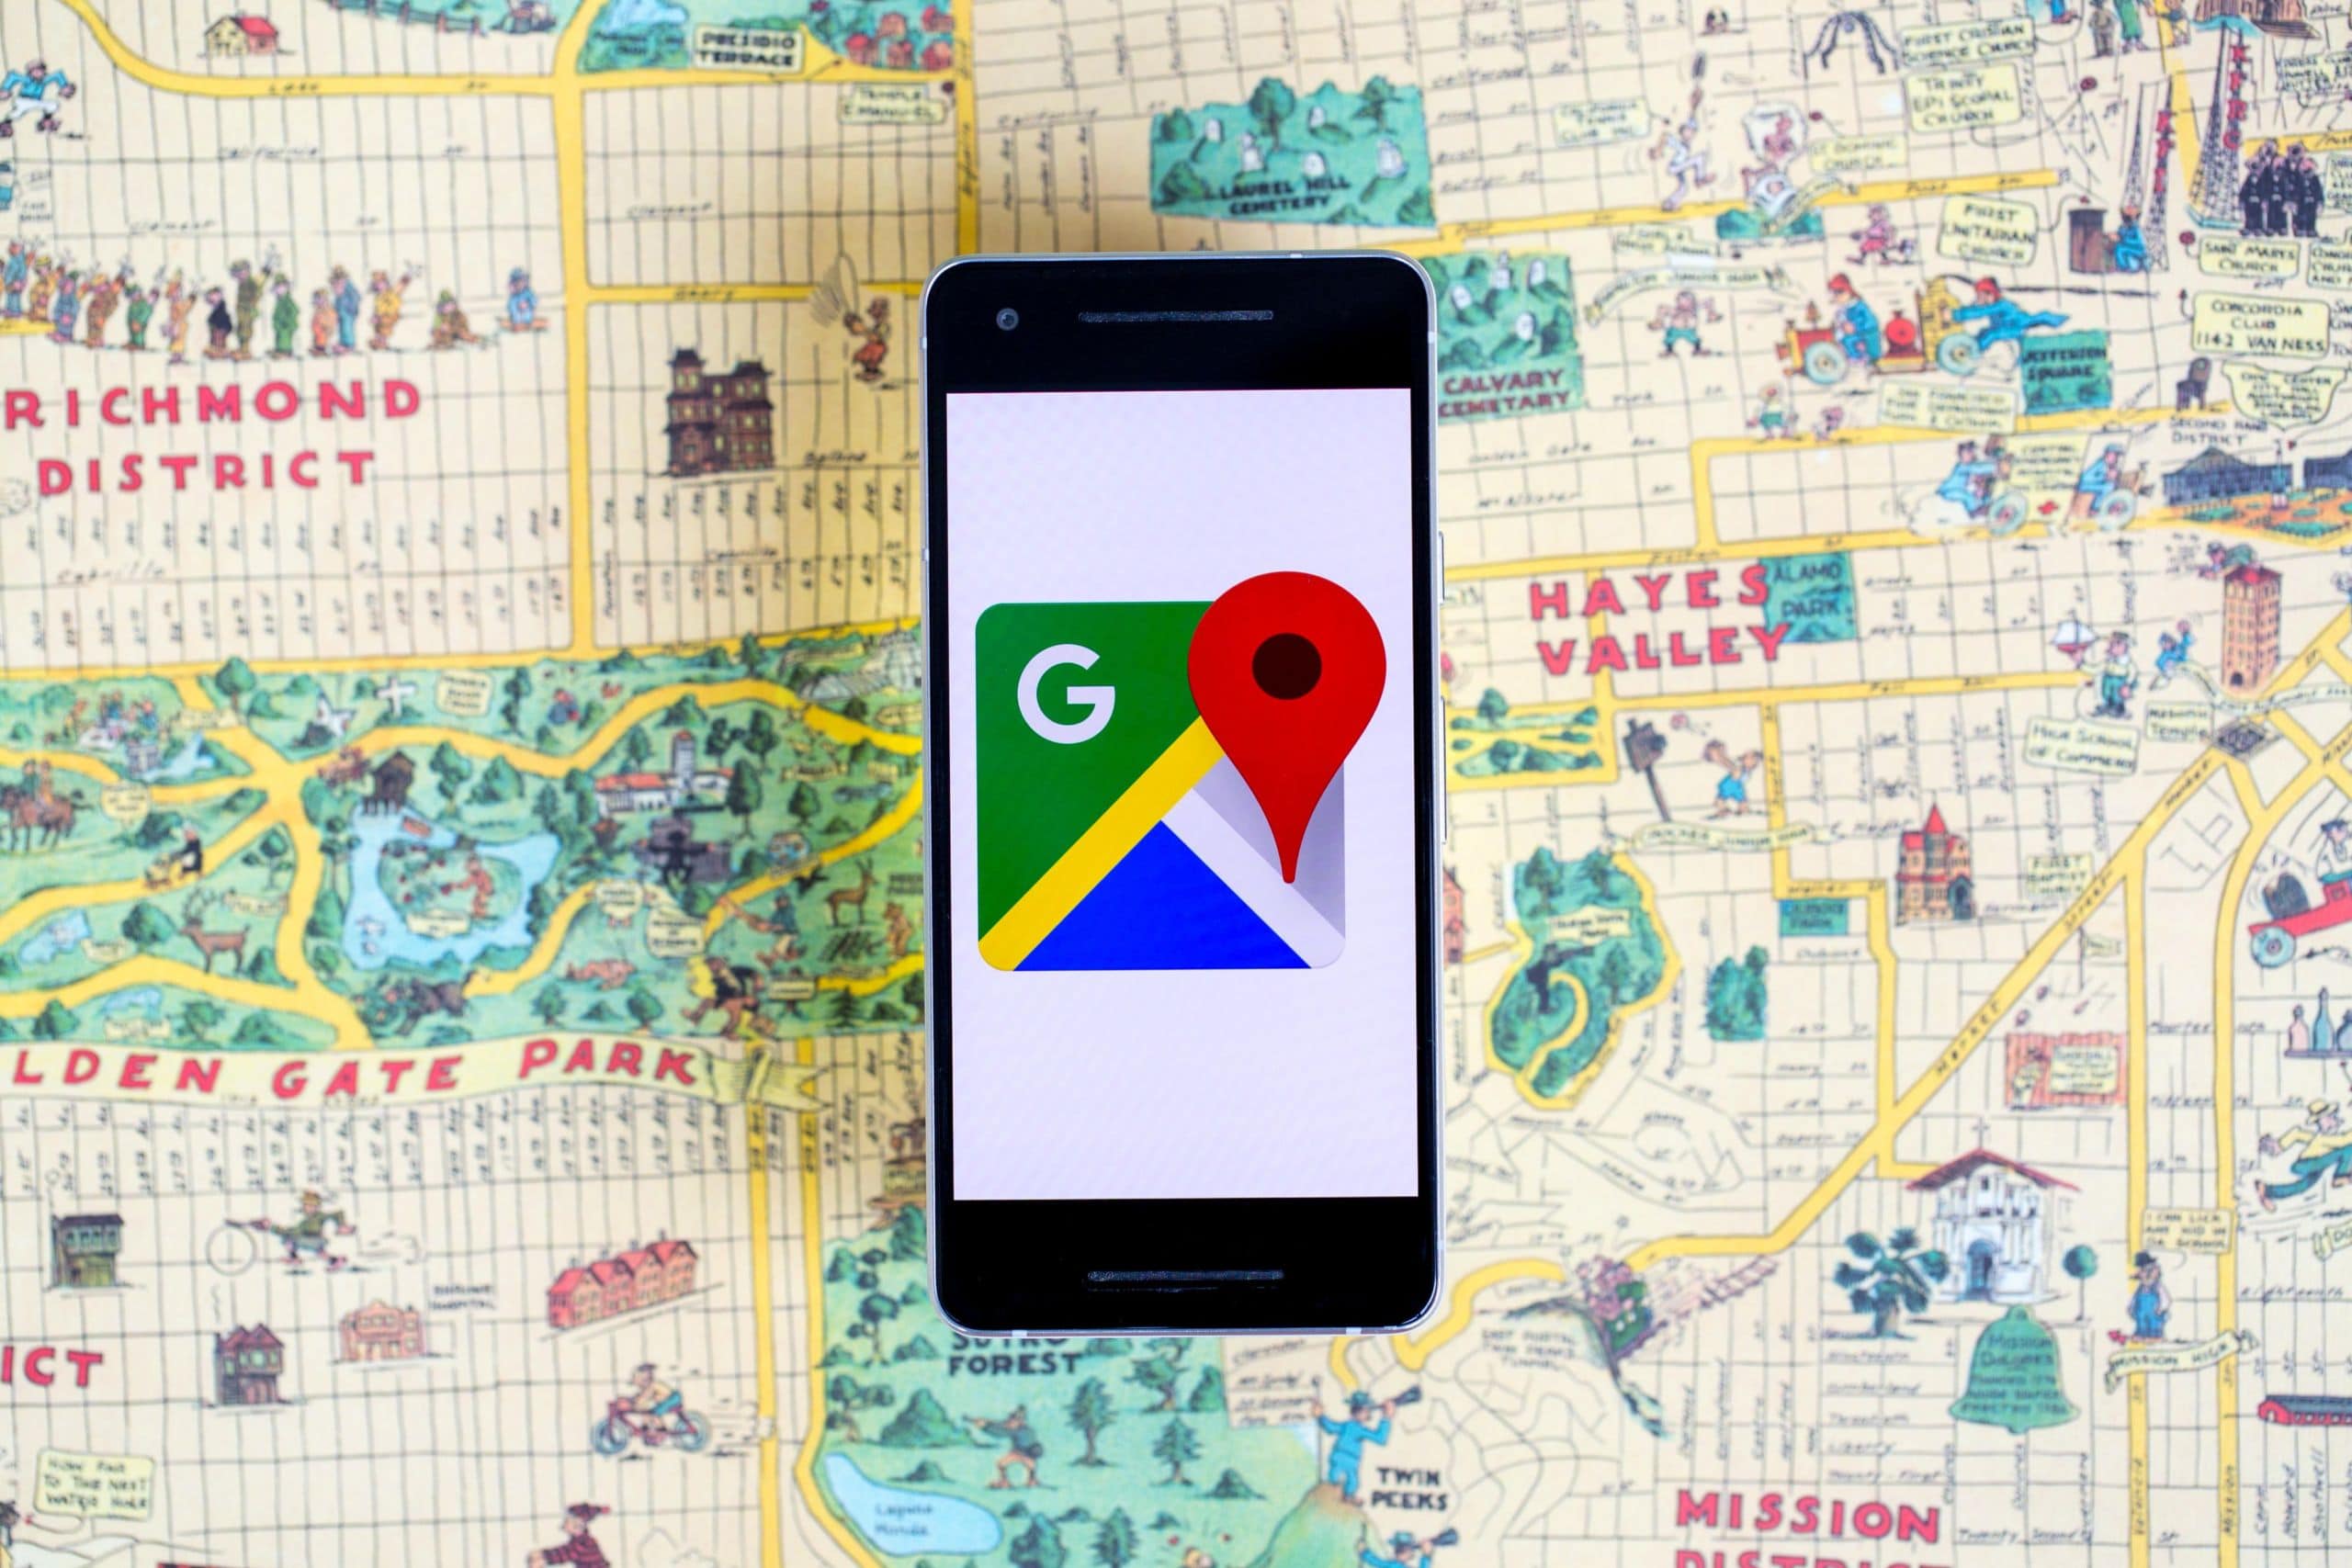 Google Maps Nedir?